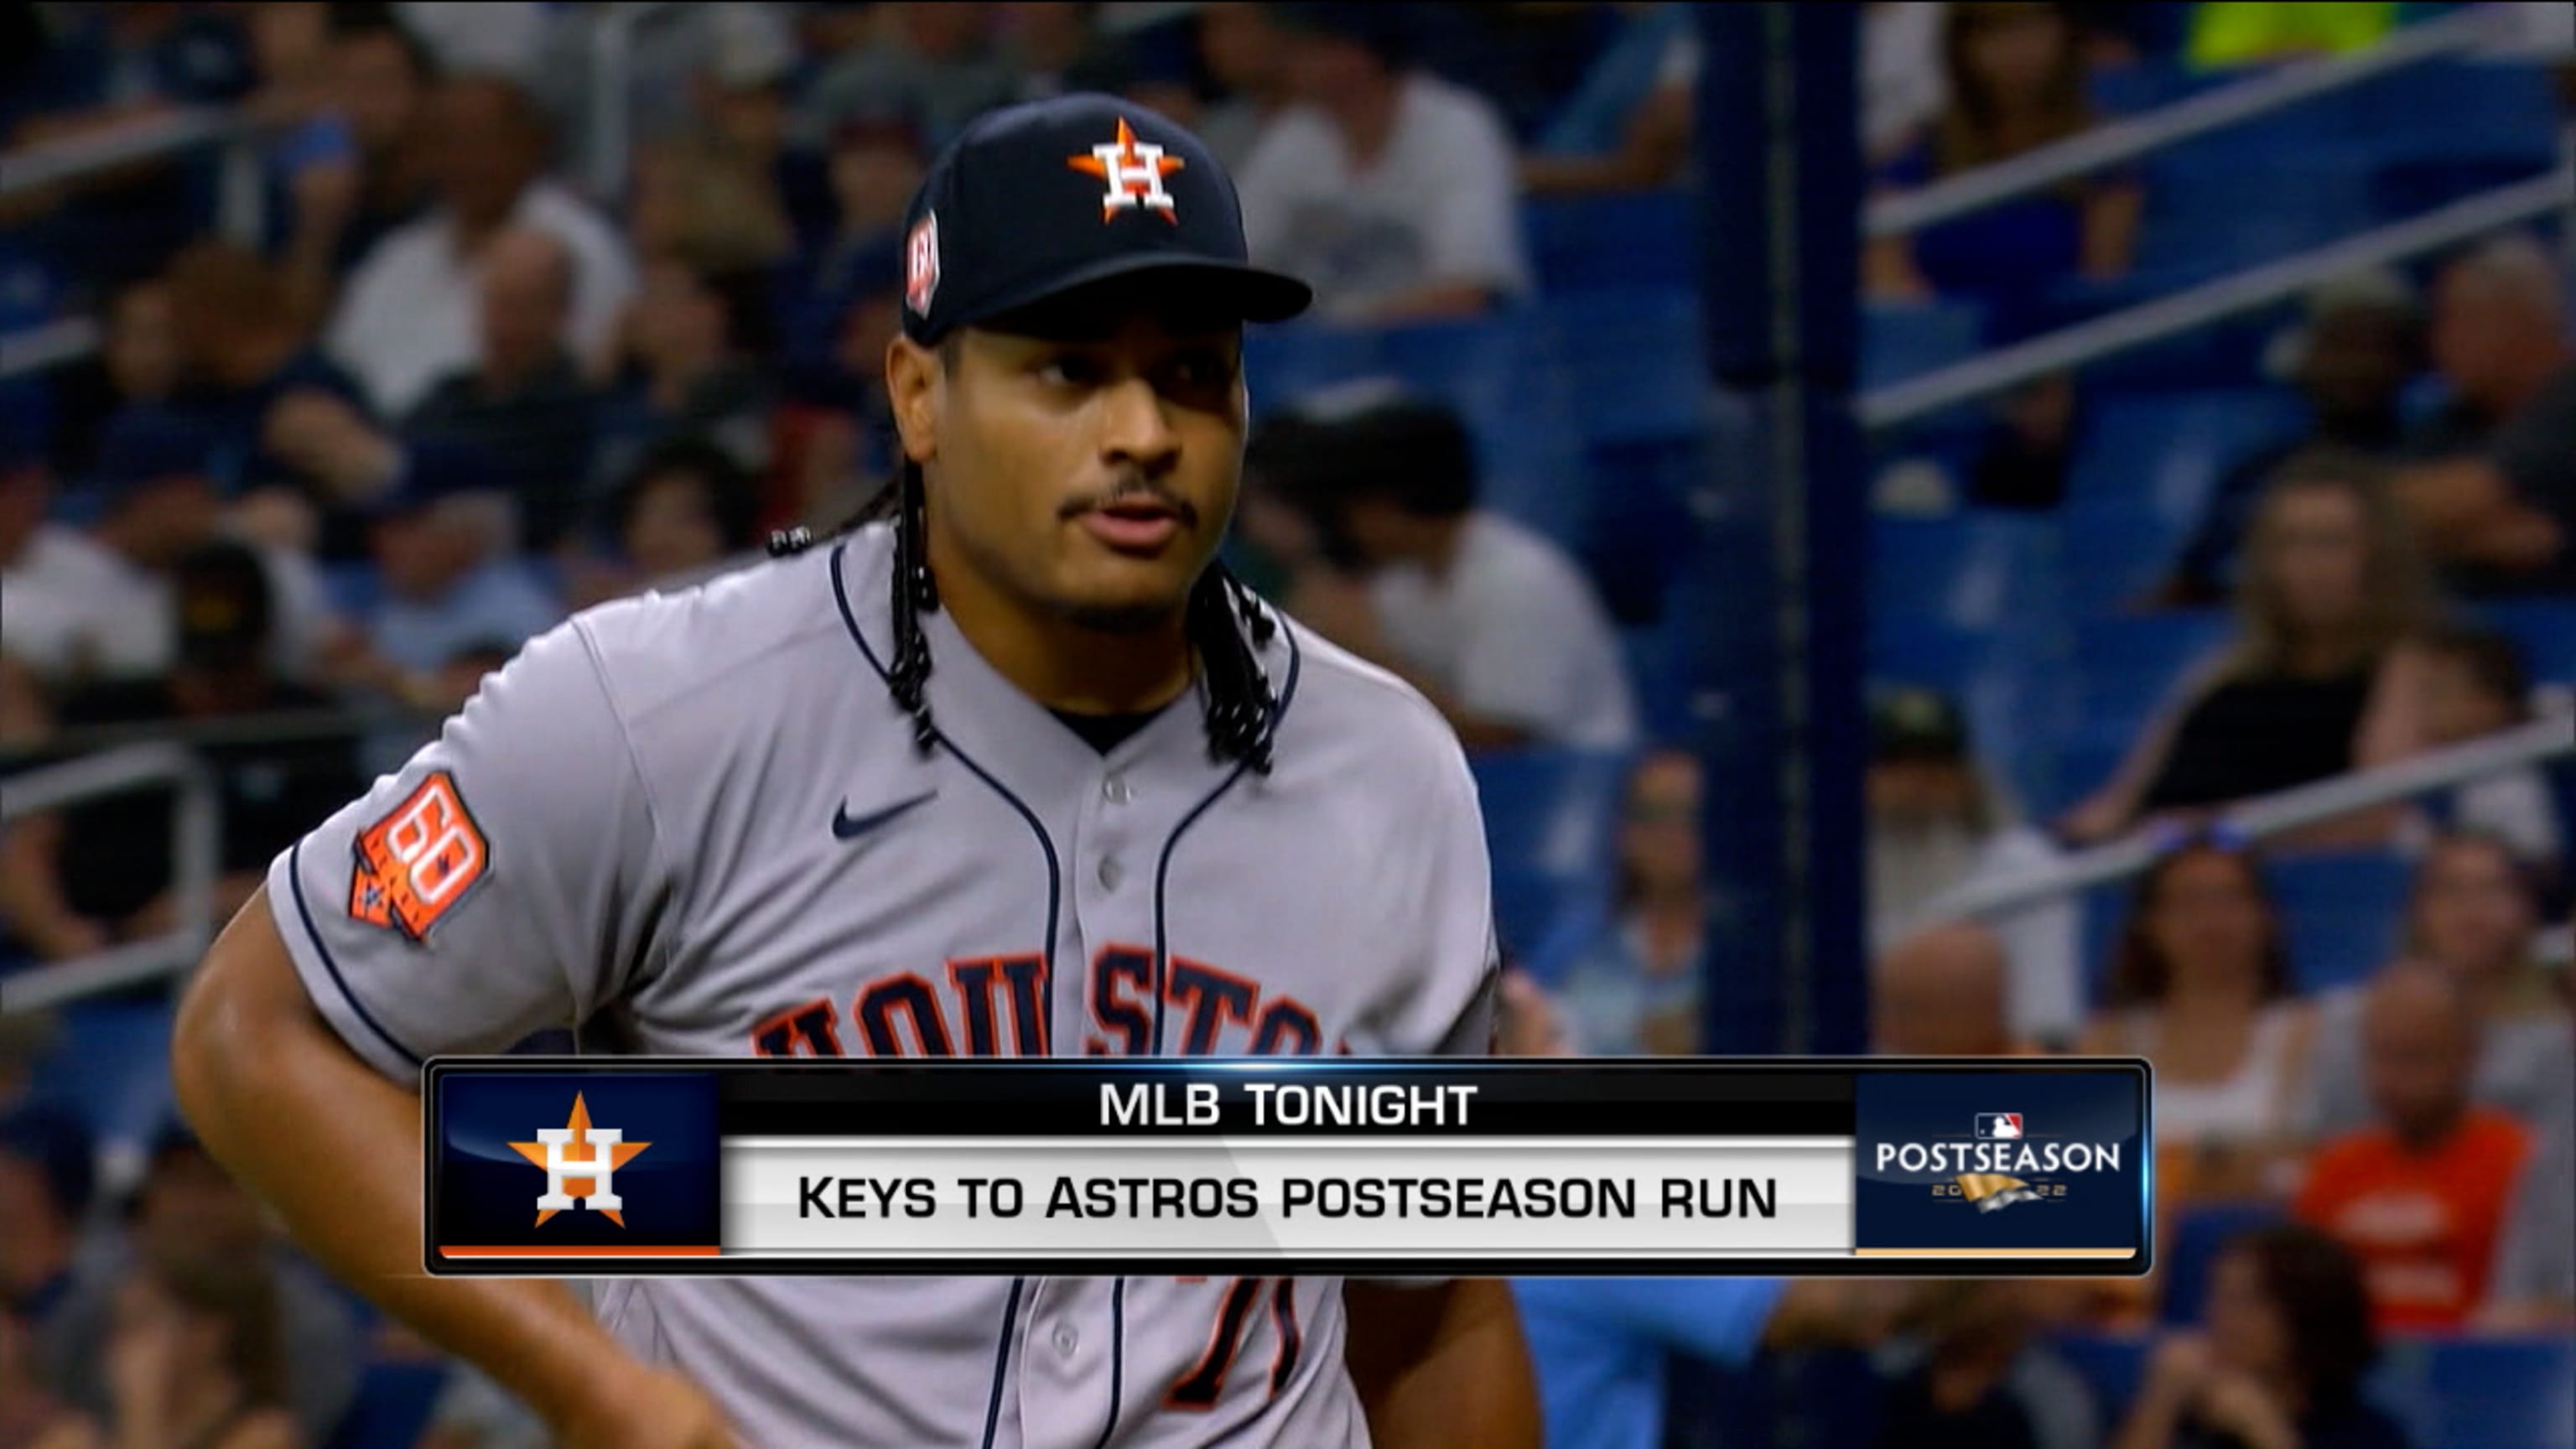 Keys to Astros' postseason